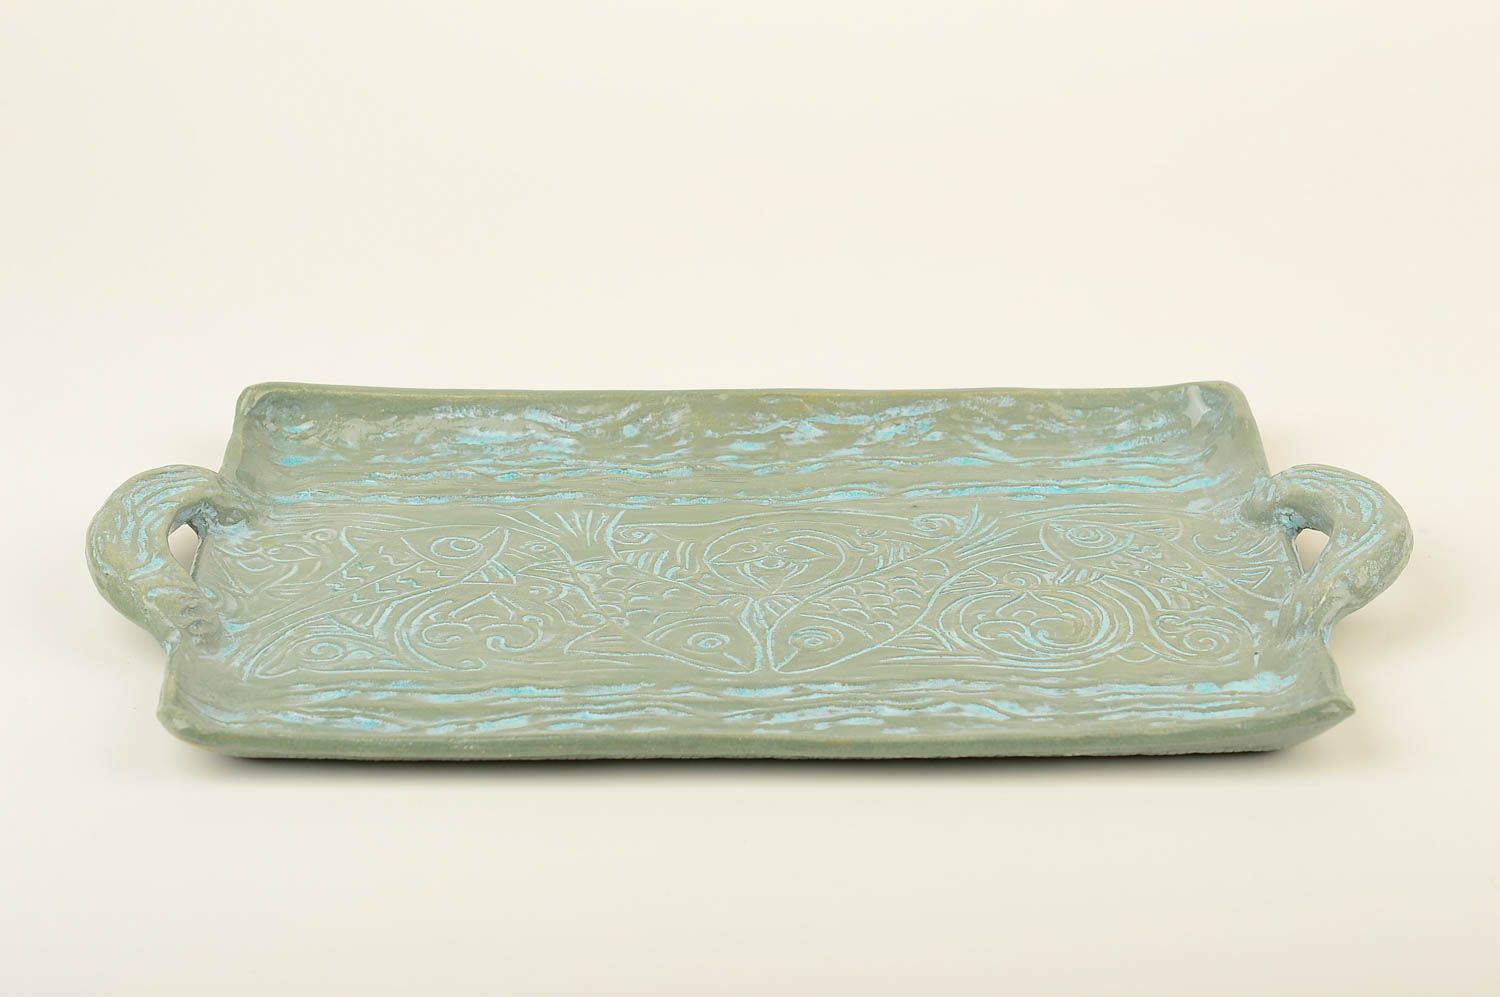 Beautiful handmade ceramic tray pottery works kitchenware ideas small gifts photo 3